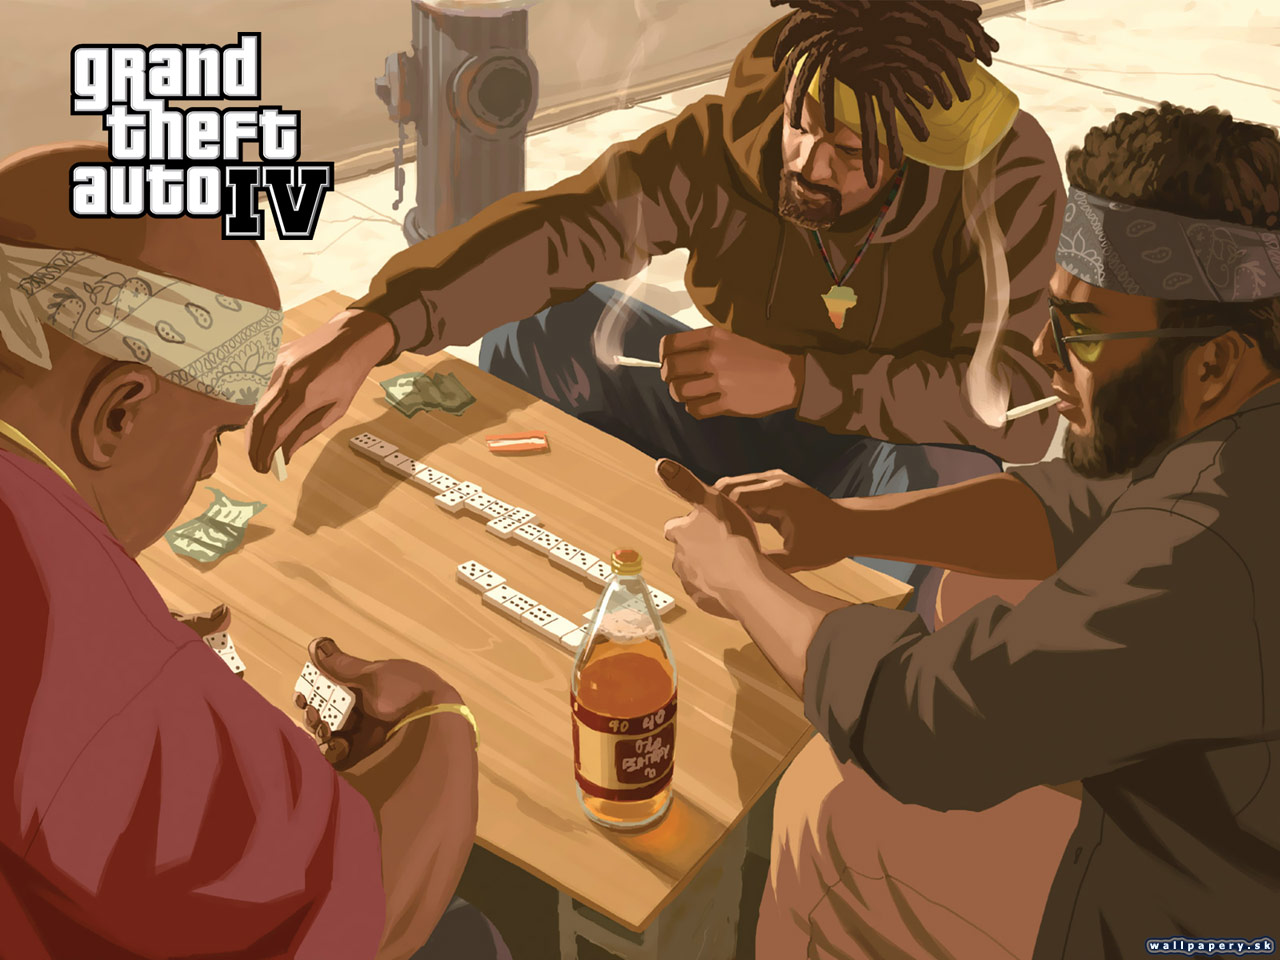 Grand Theft Auto IV - wallpaper 28